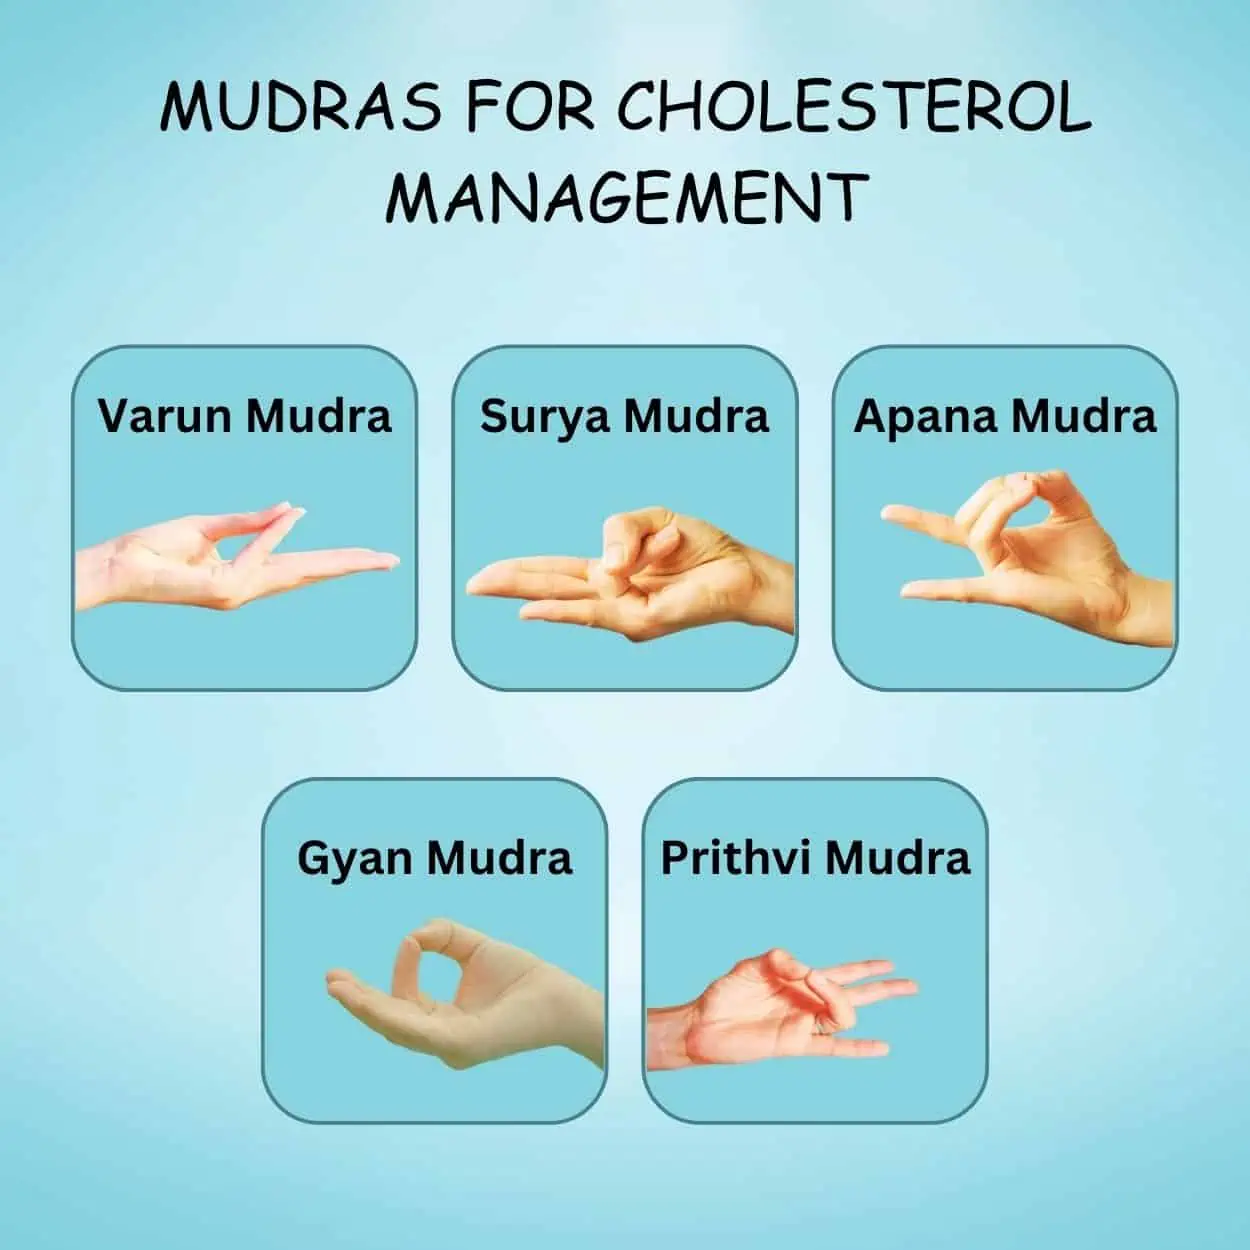 Mudras for Cholesterol Management